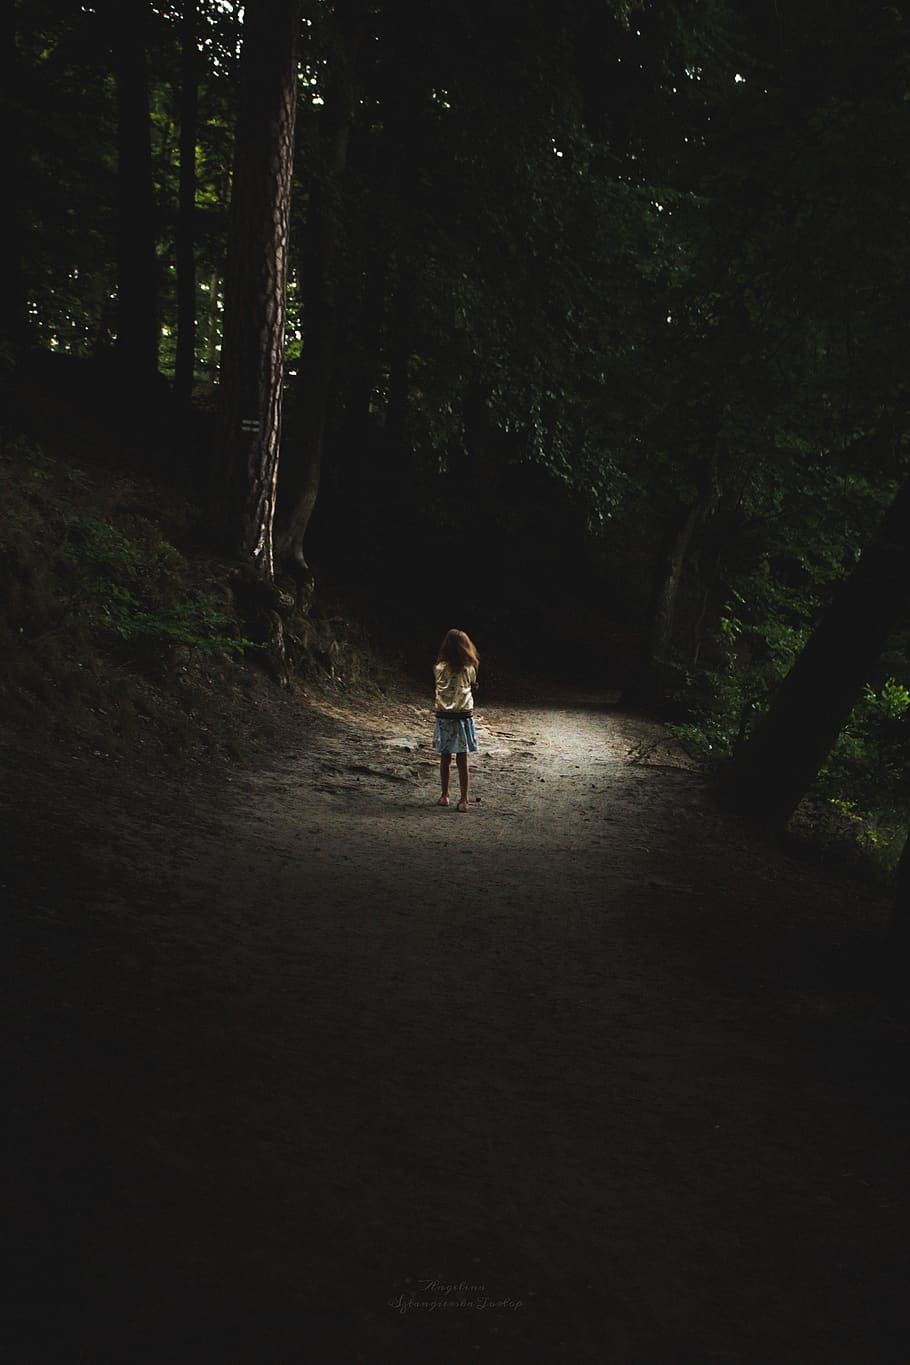 HD wallpaper: forest, child, alone, dark, gloomy, scary, path